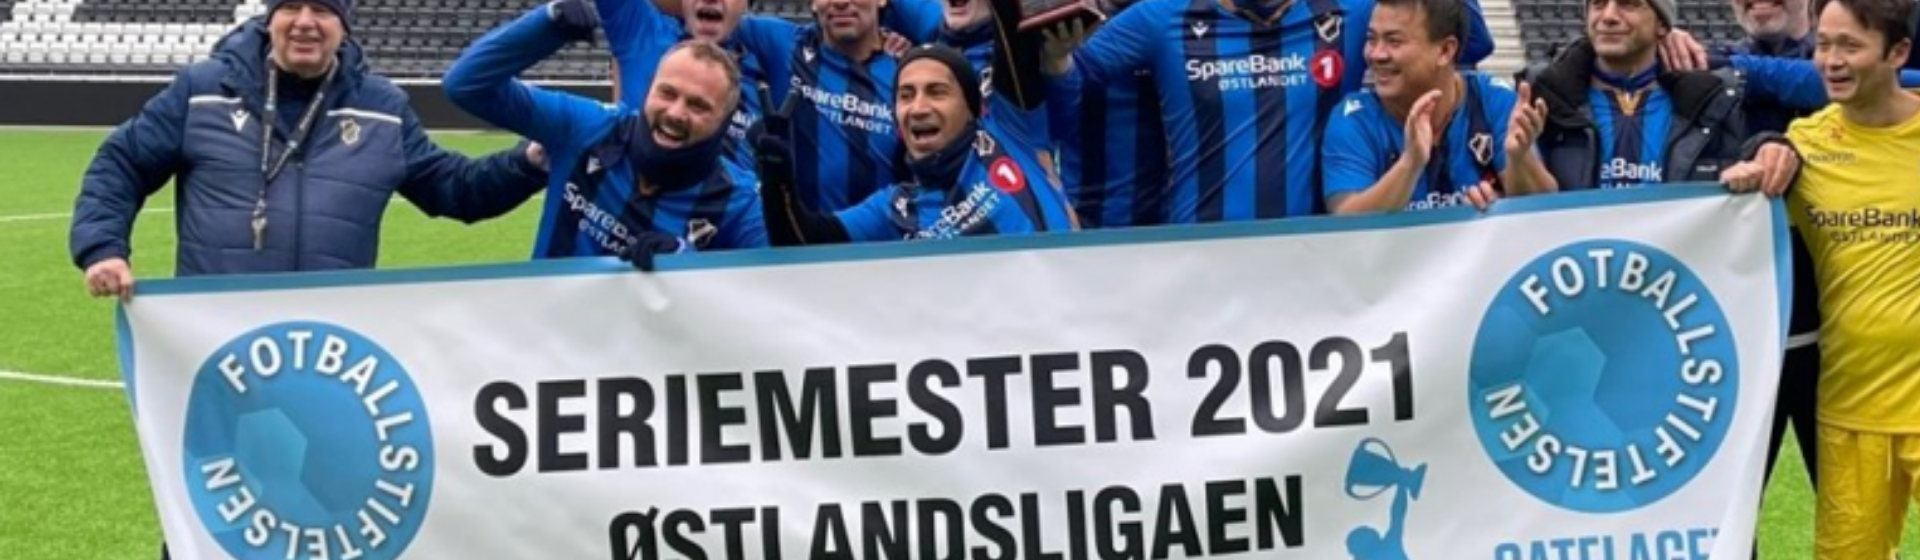 Stabæk Fotball header